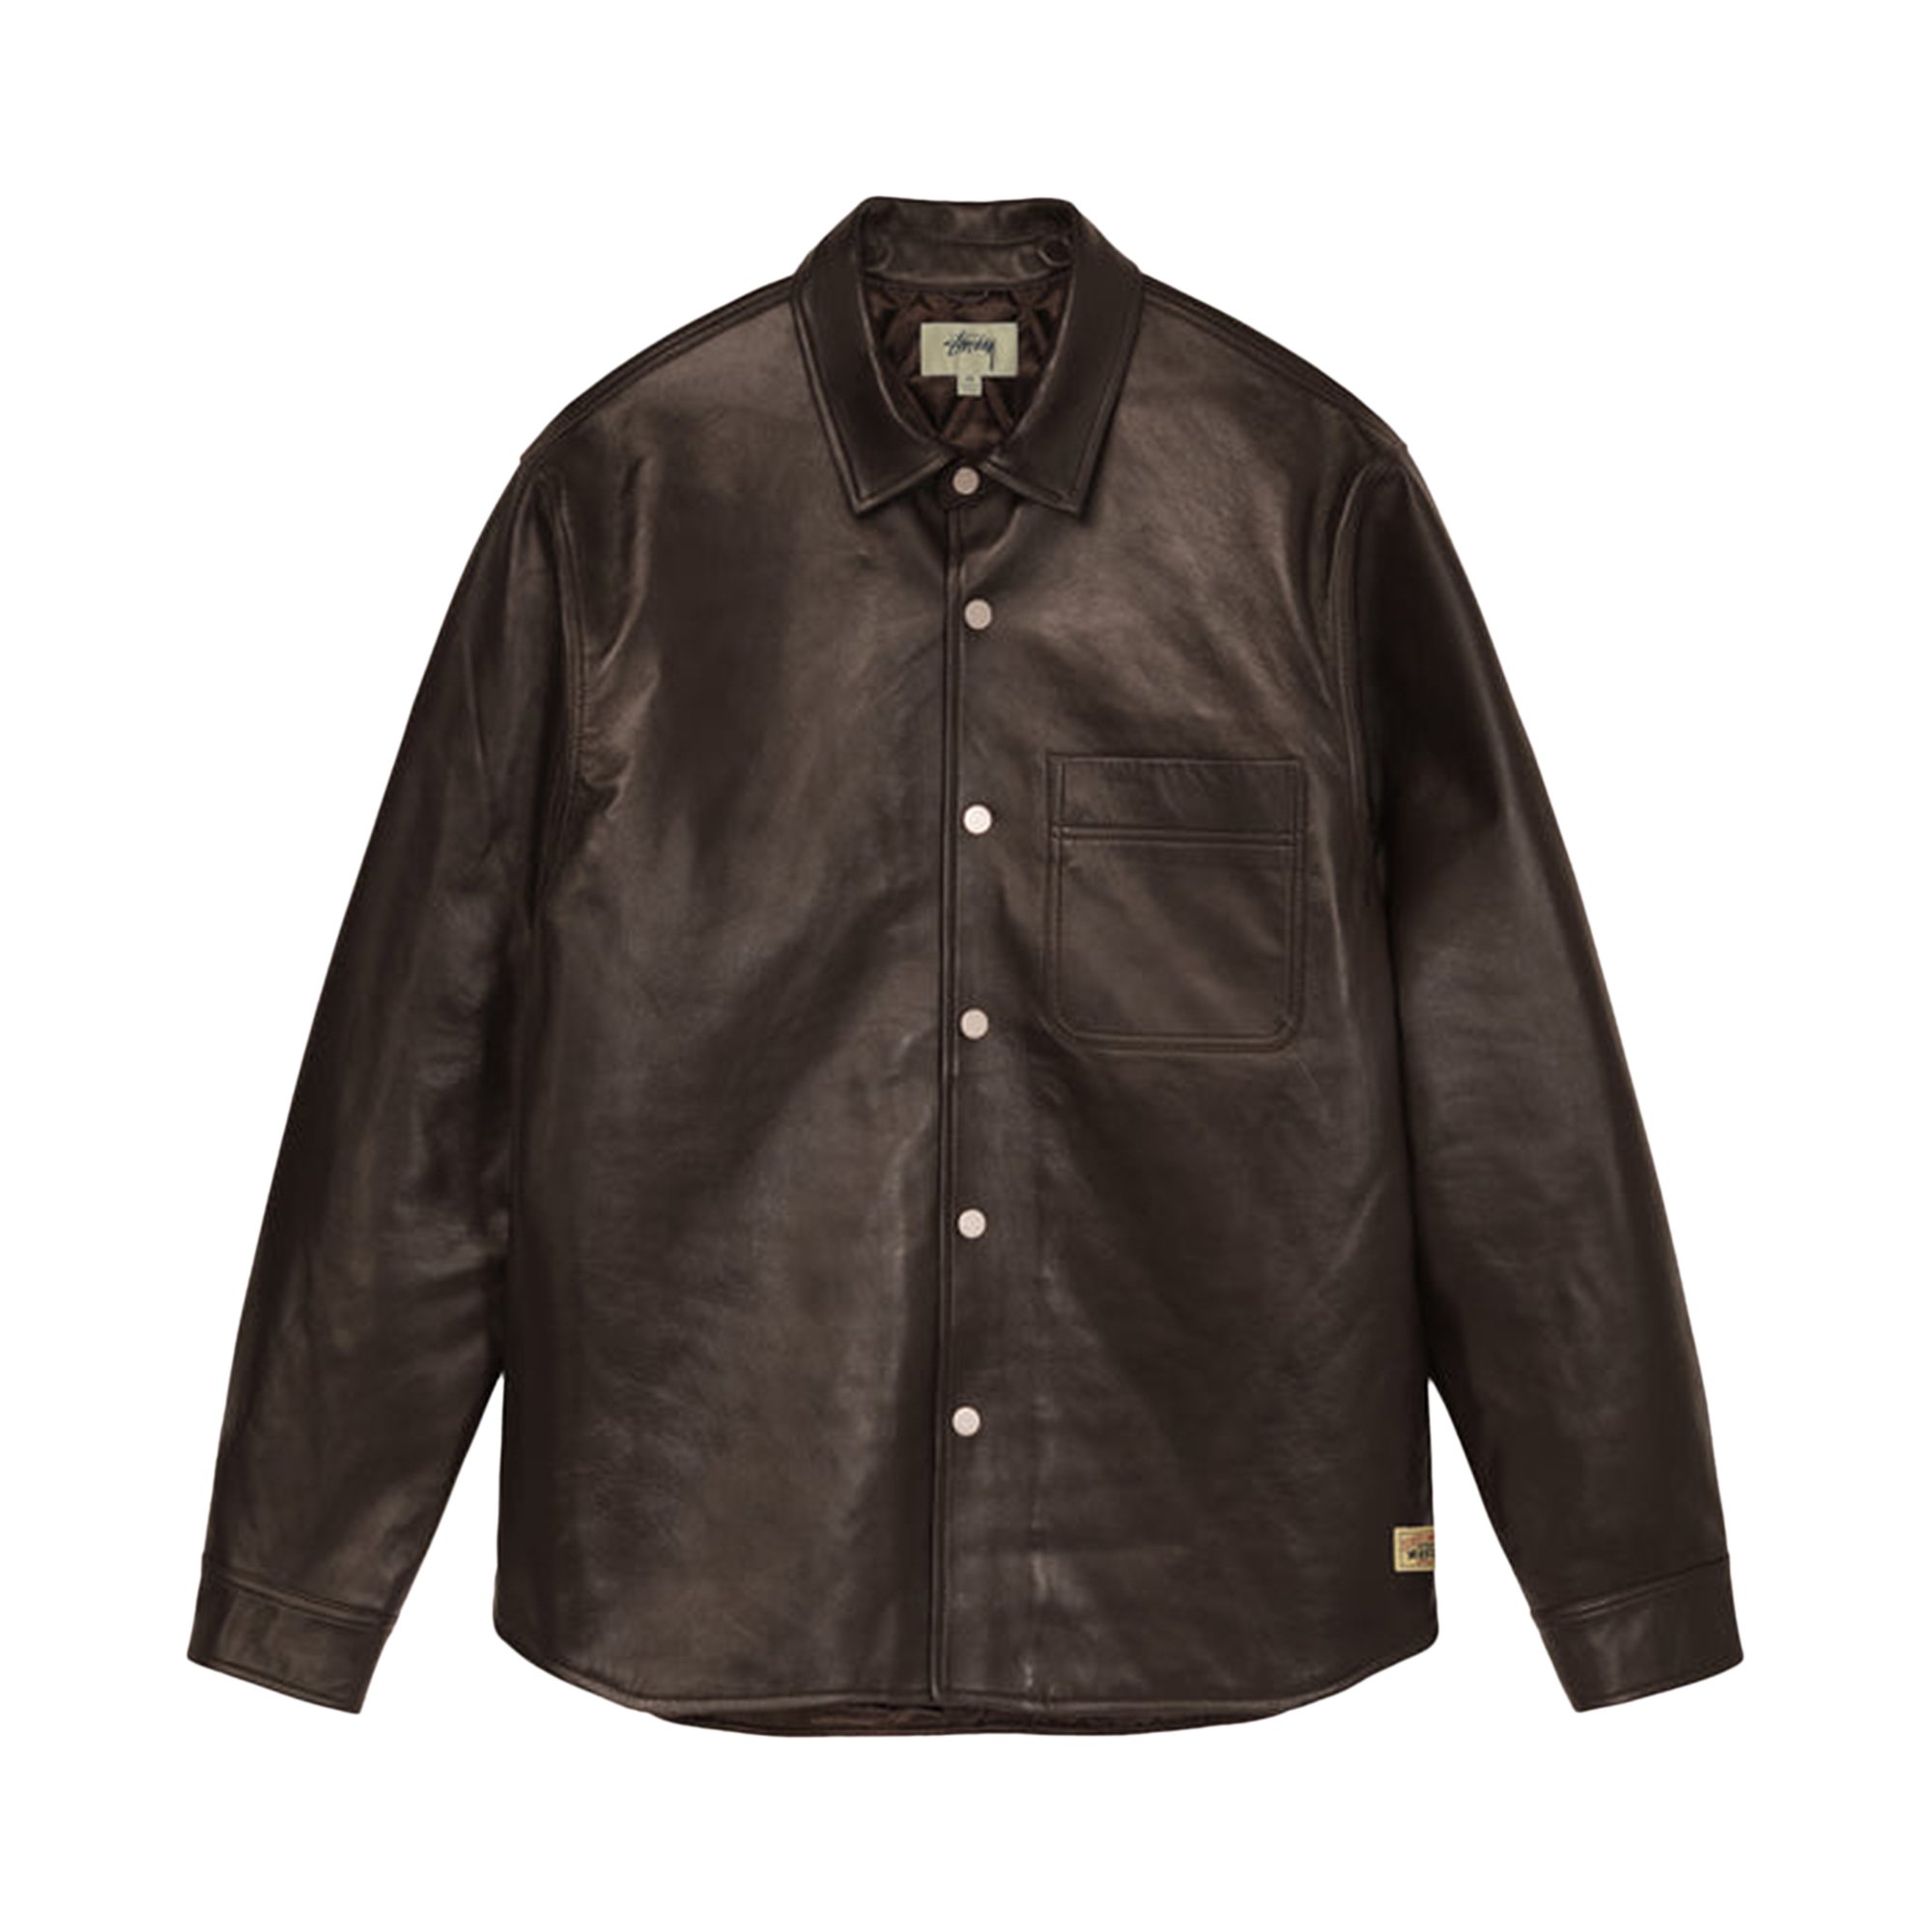 Buy Stussy Boxy Leather Overshirt 'Espresso' - 1110259 ESPR | GOAT